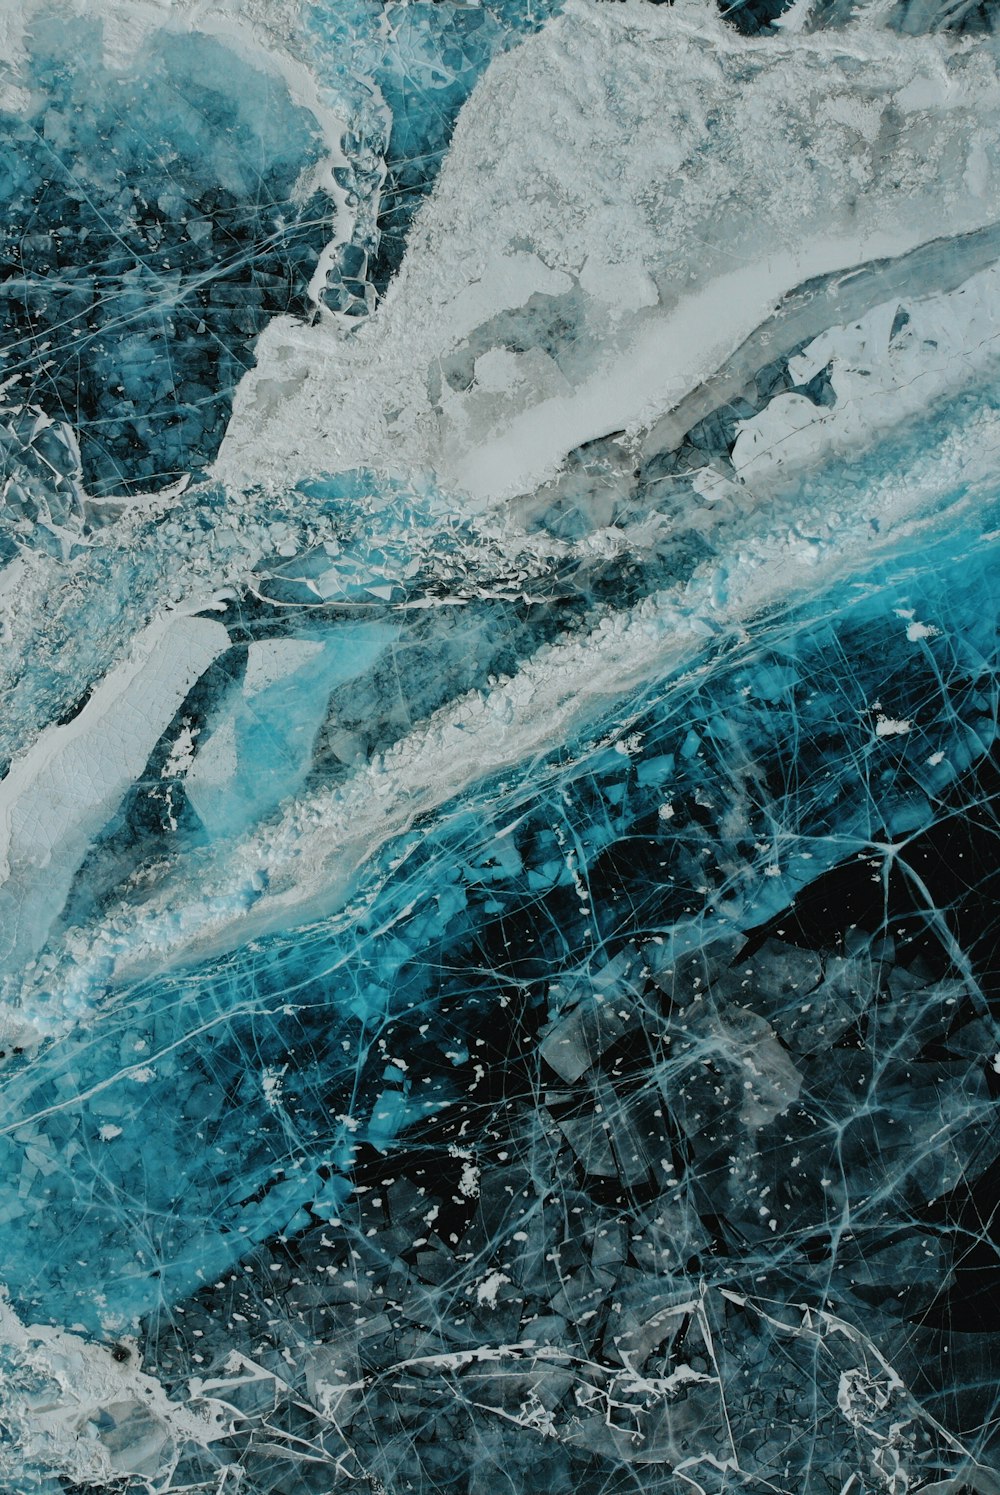 fotografia ravvicinata di pietra minerale bianca e blu